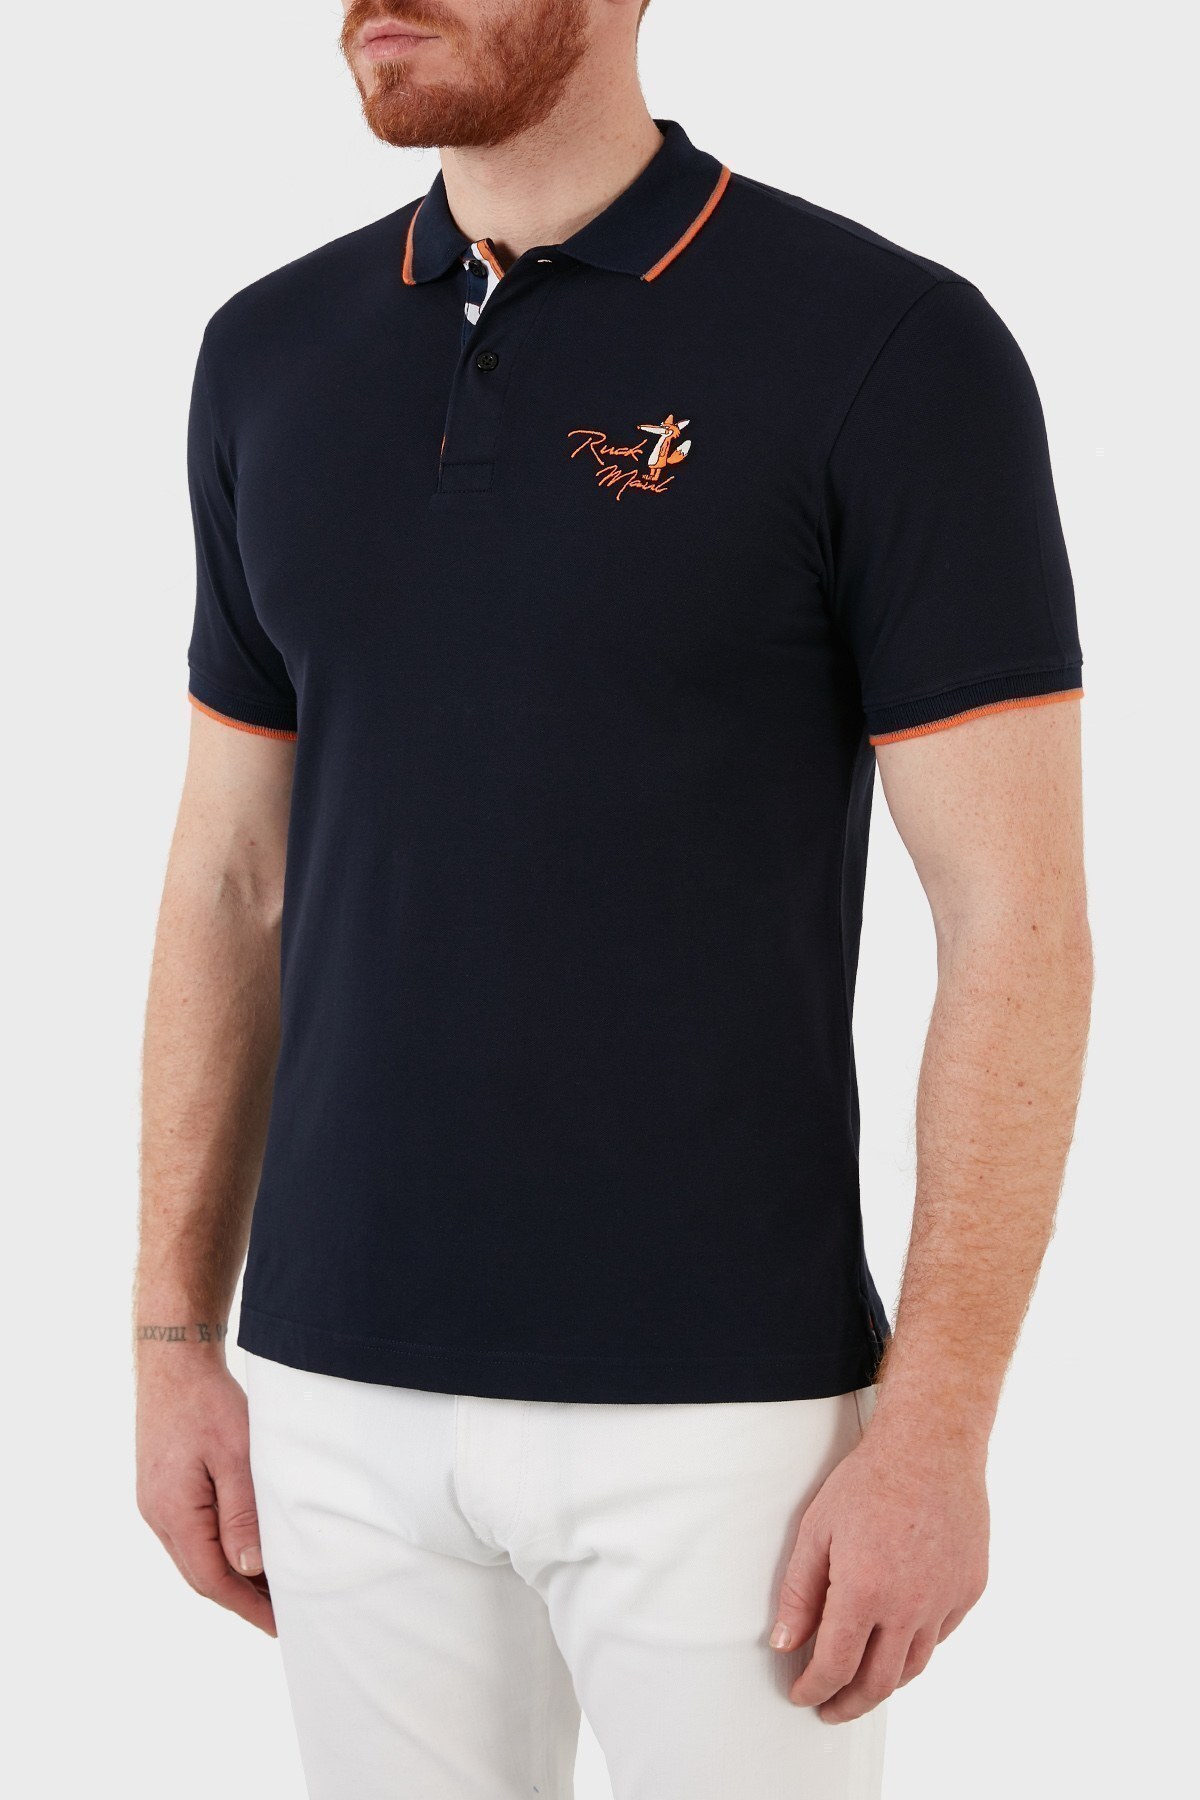 Ruck & Maul Pamuklu Düğmeli T Shirt Erkek Polo RMM01000716 LACİVERT